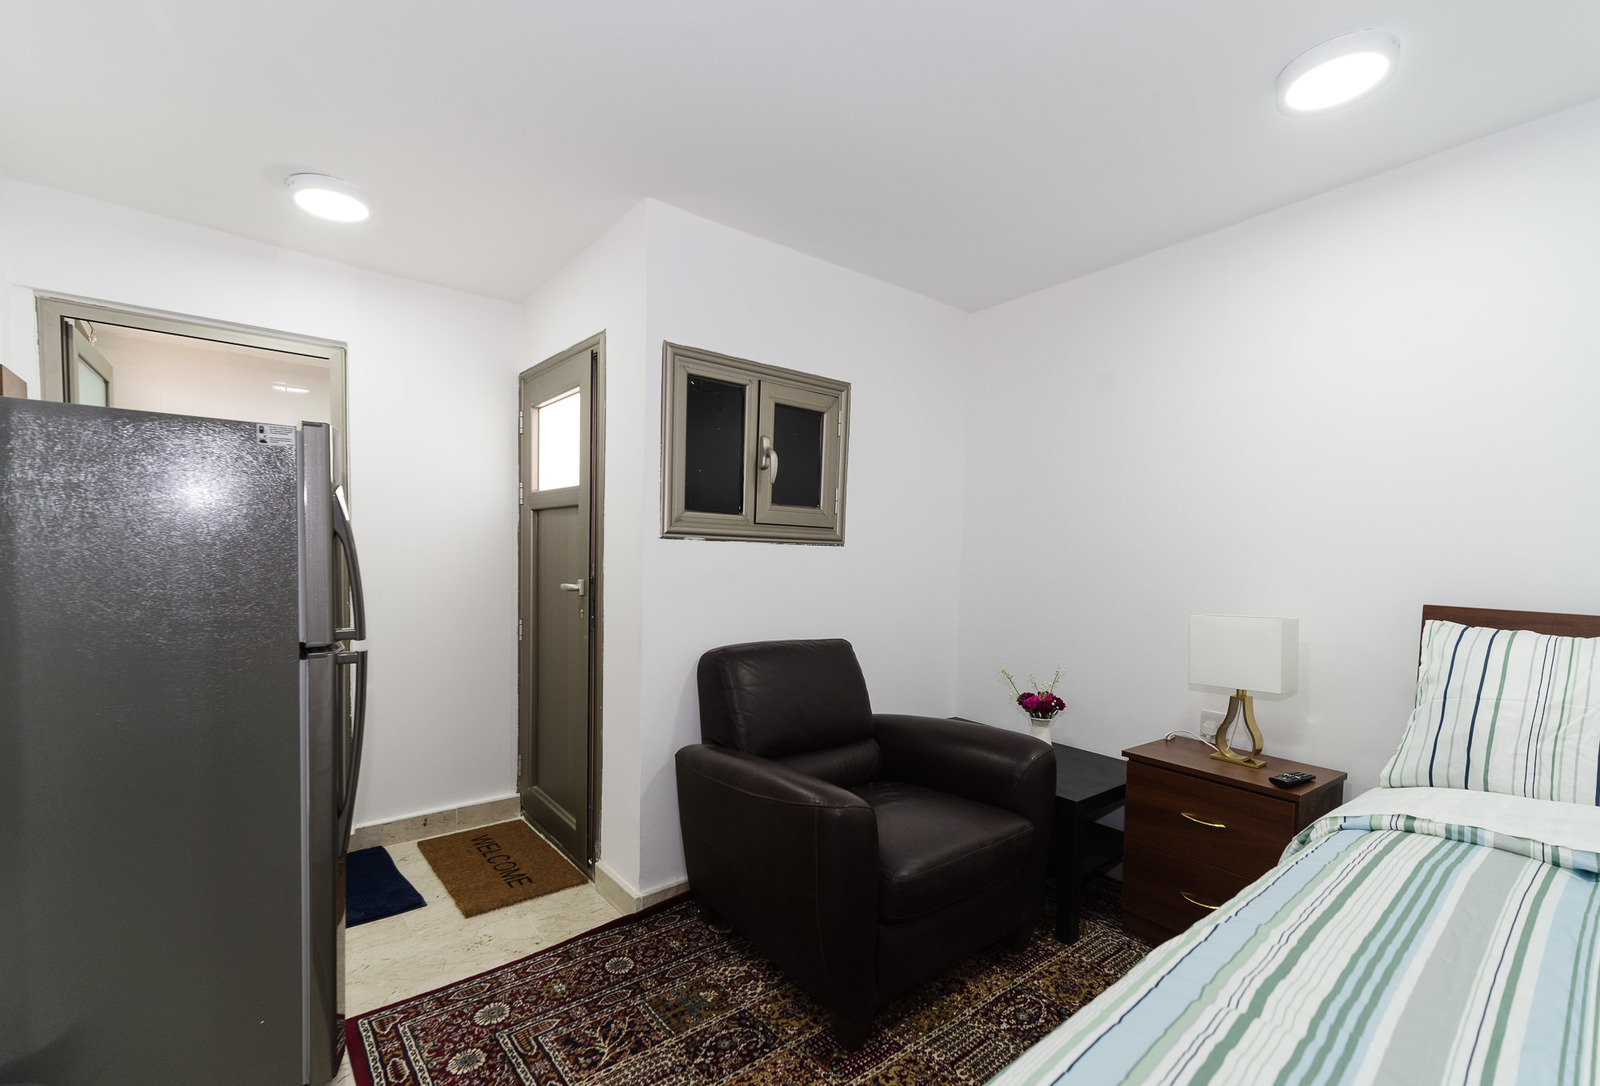 Salwa – small, furnished, rooftop studio apartment